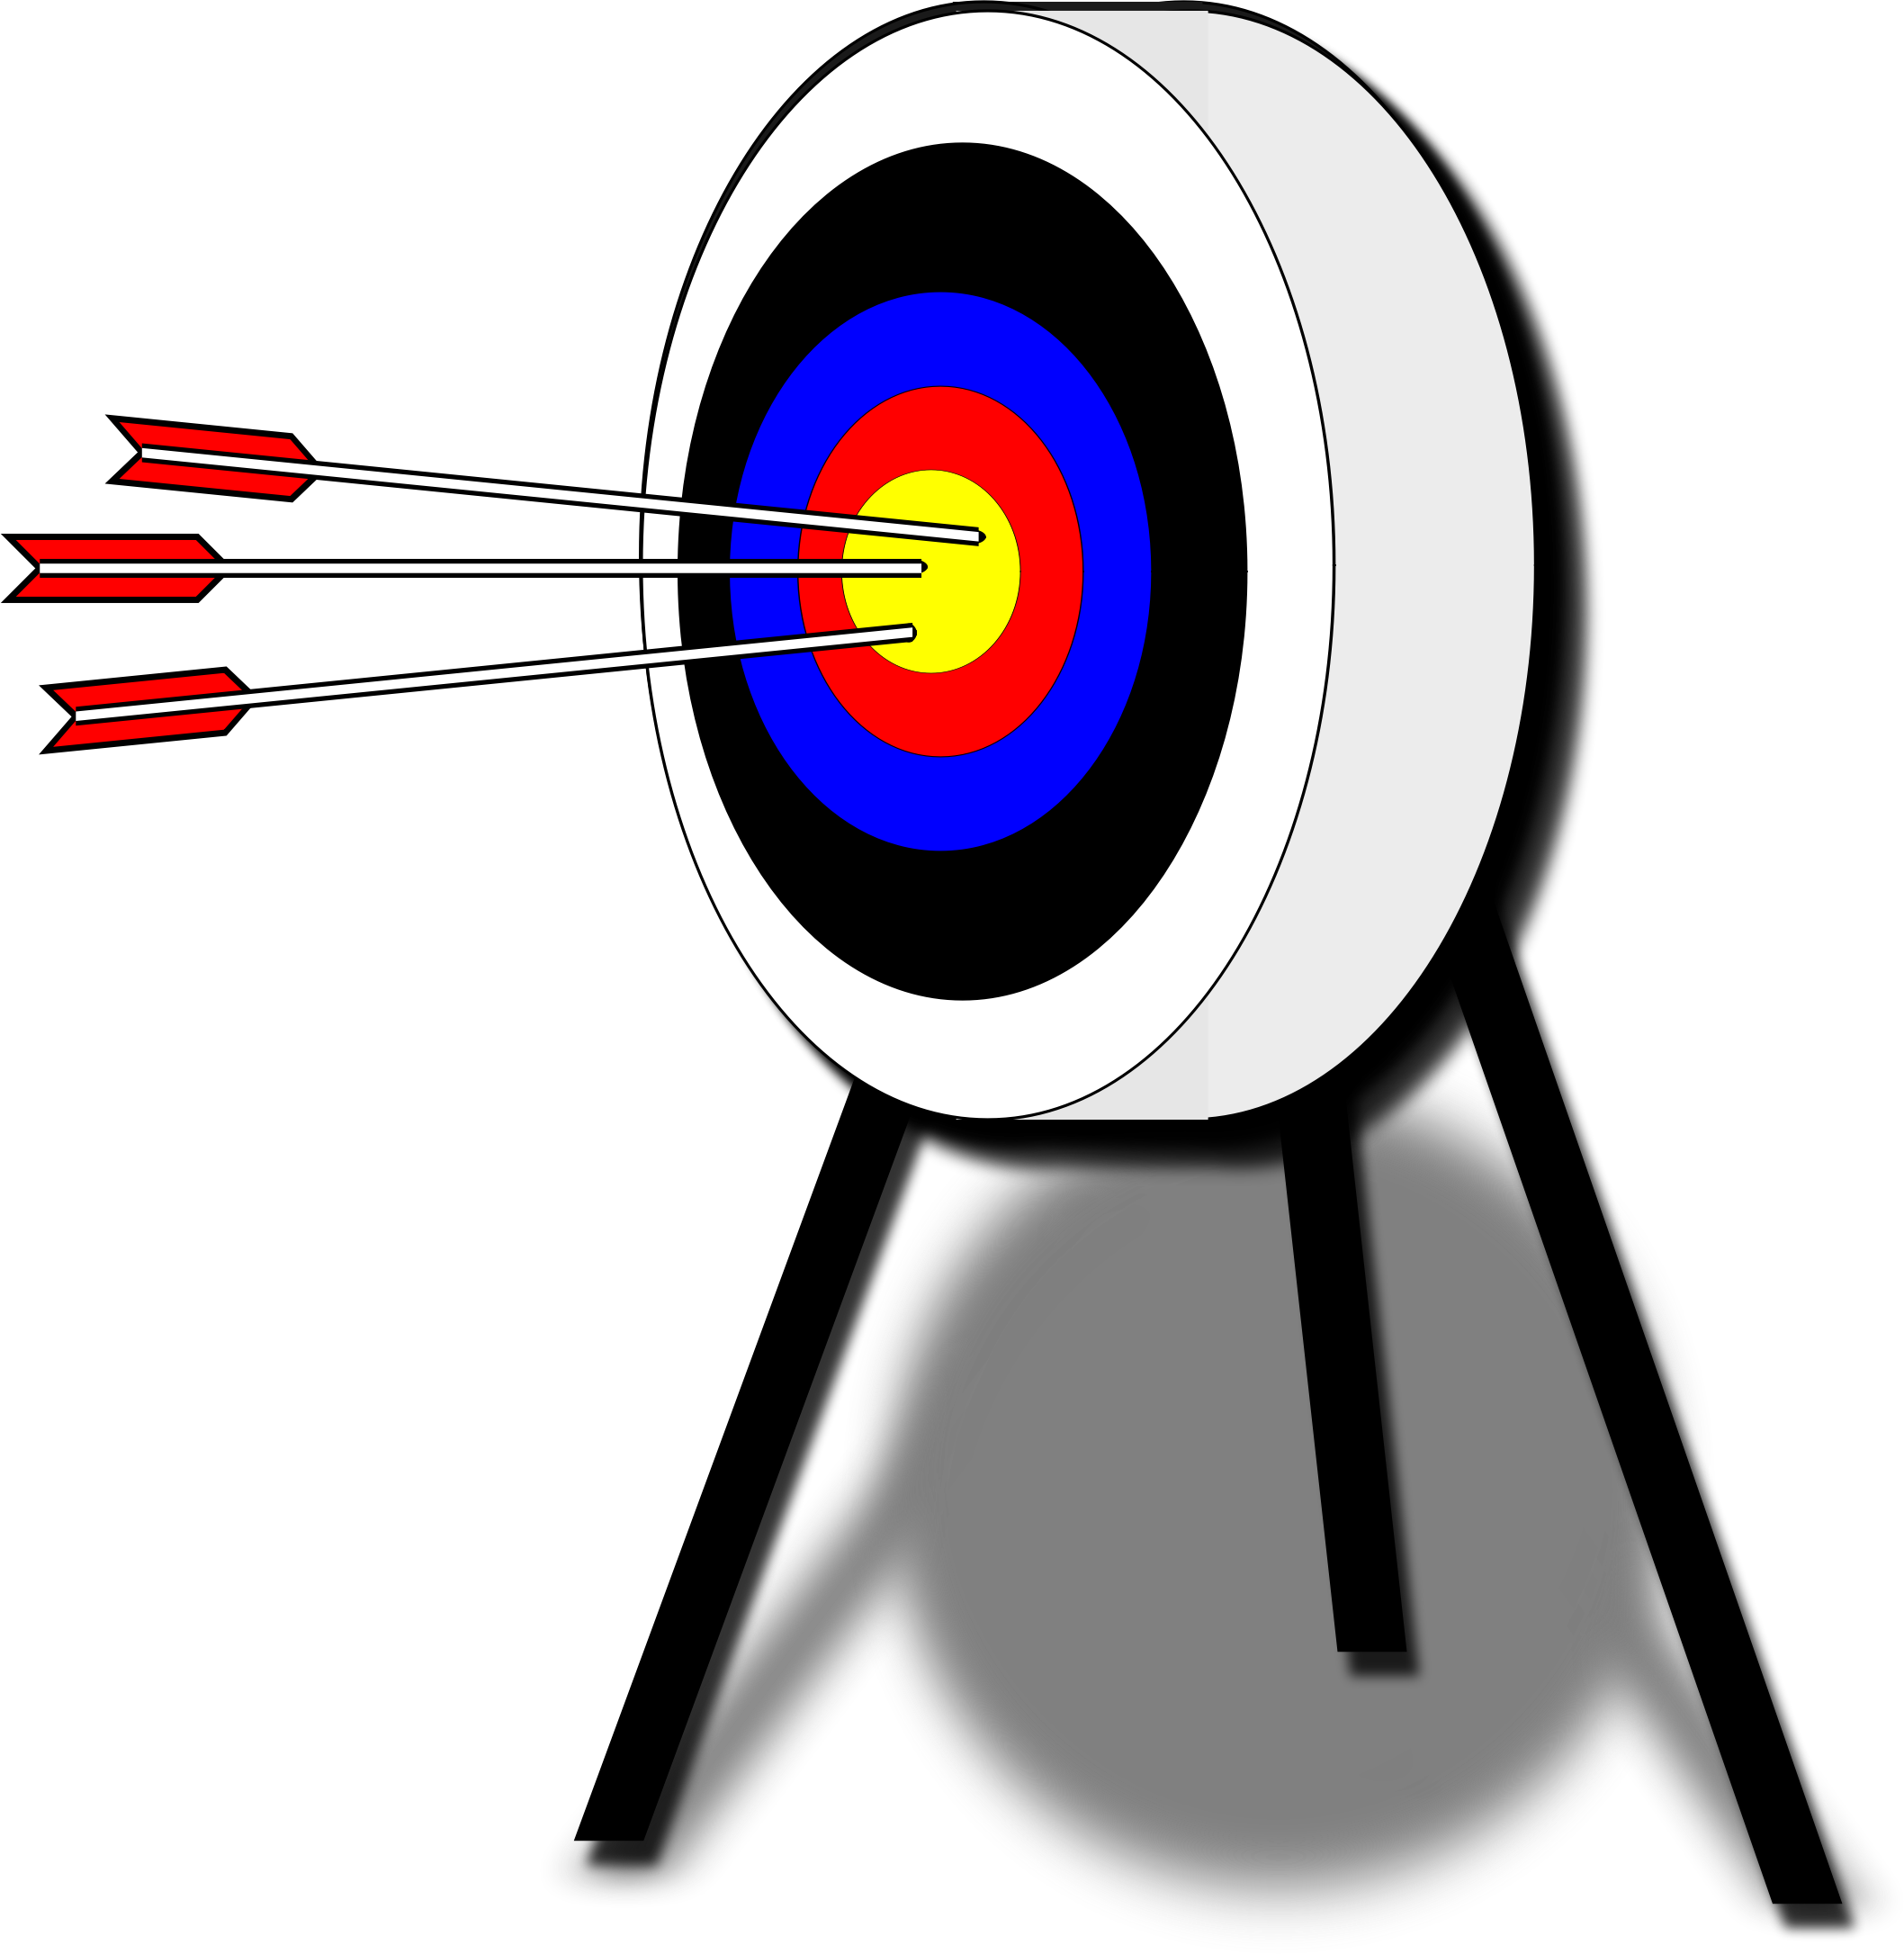 Clipart - Archery Target